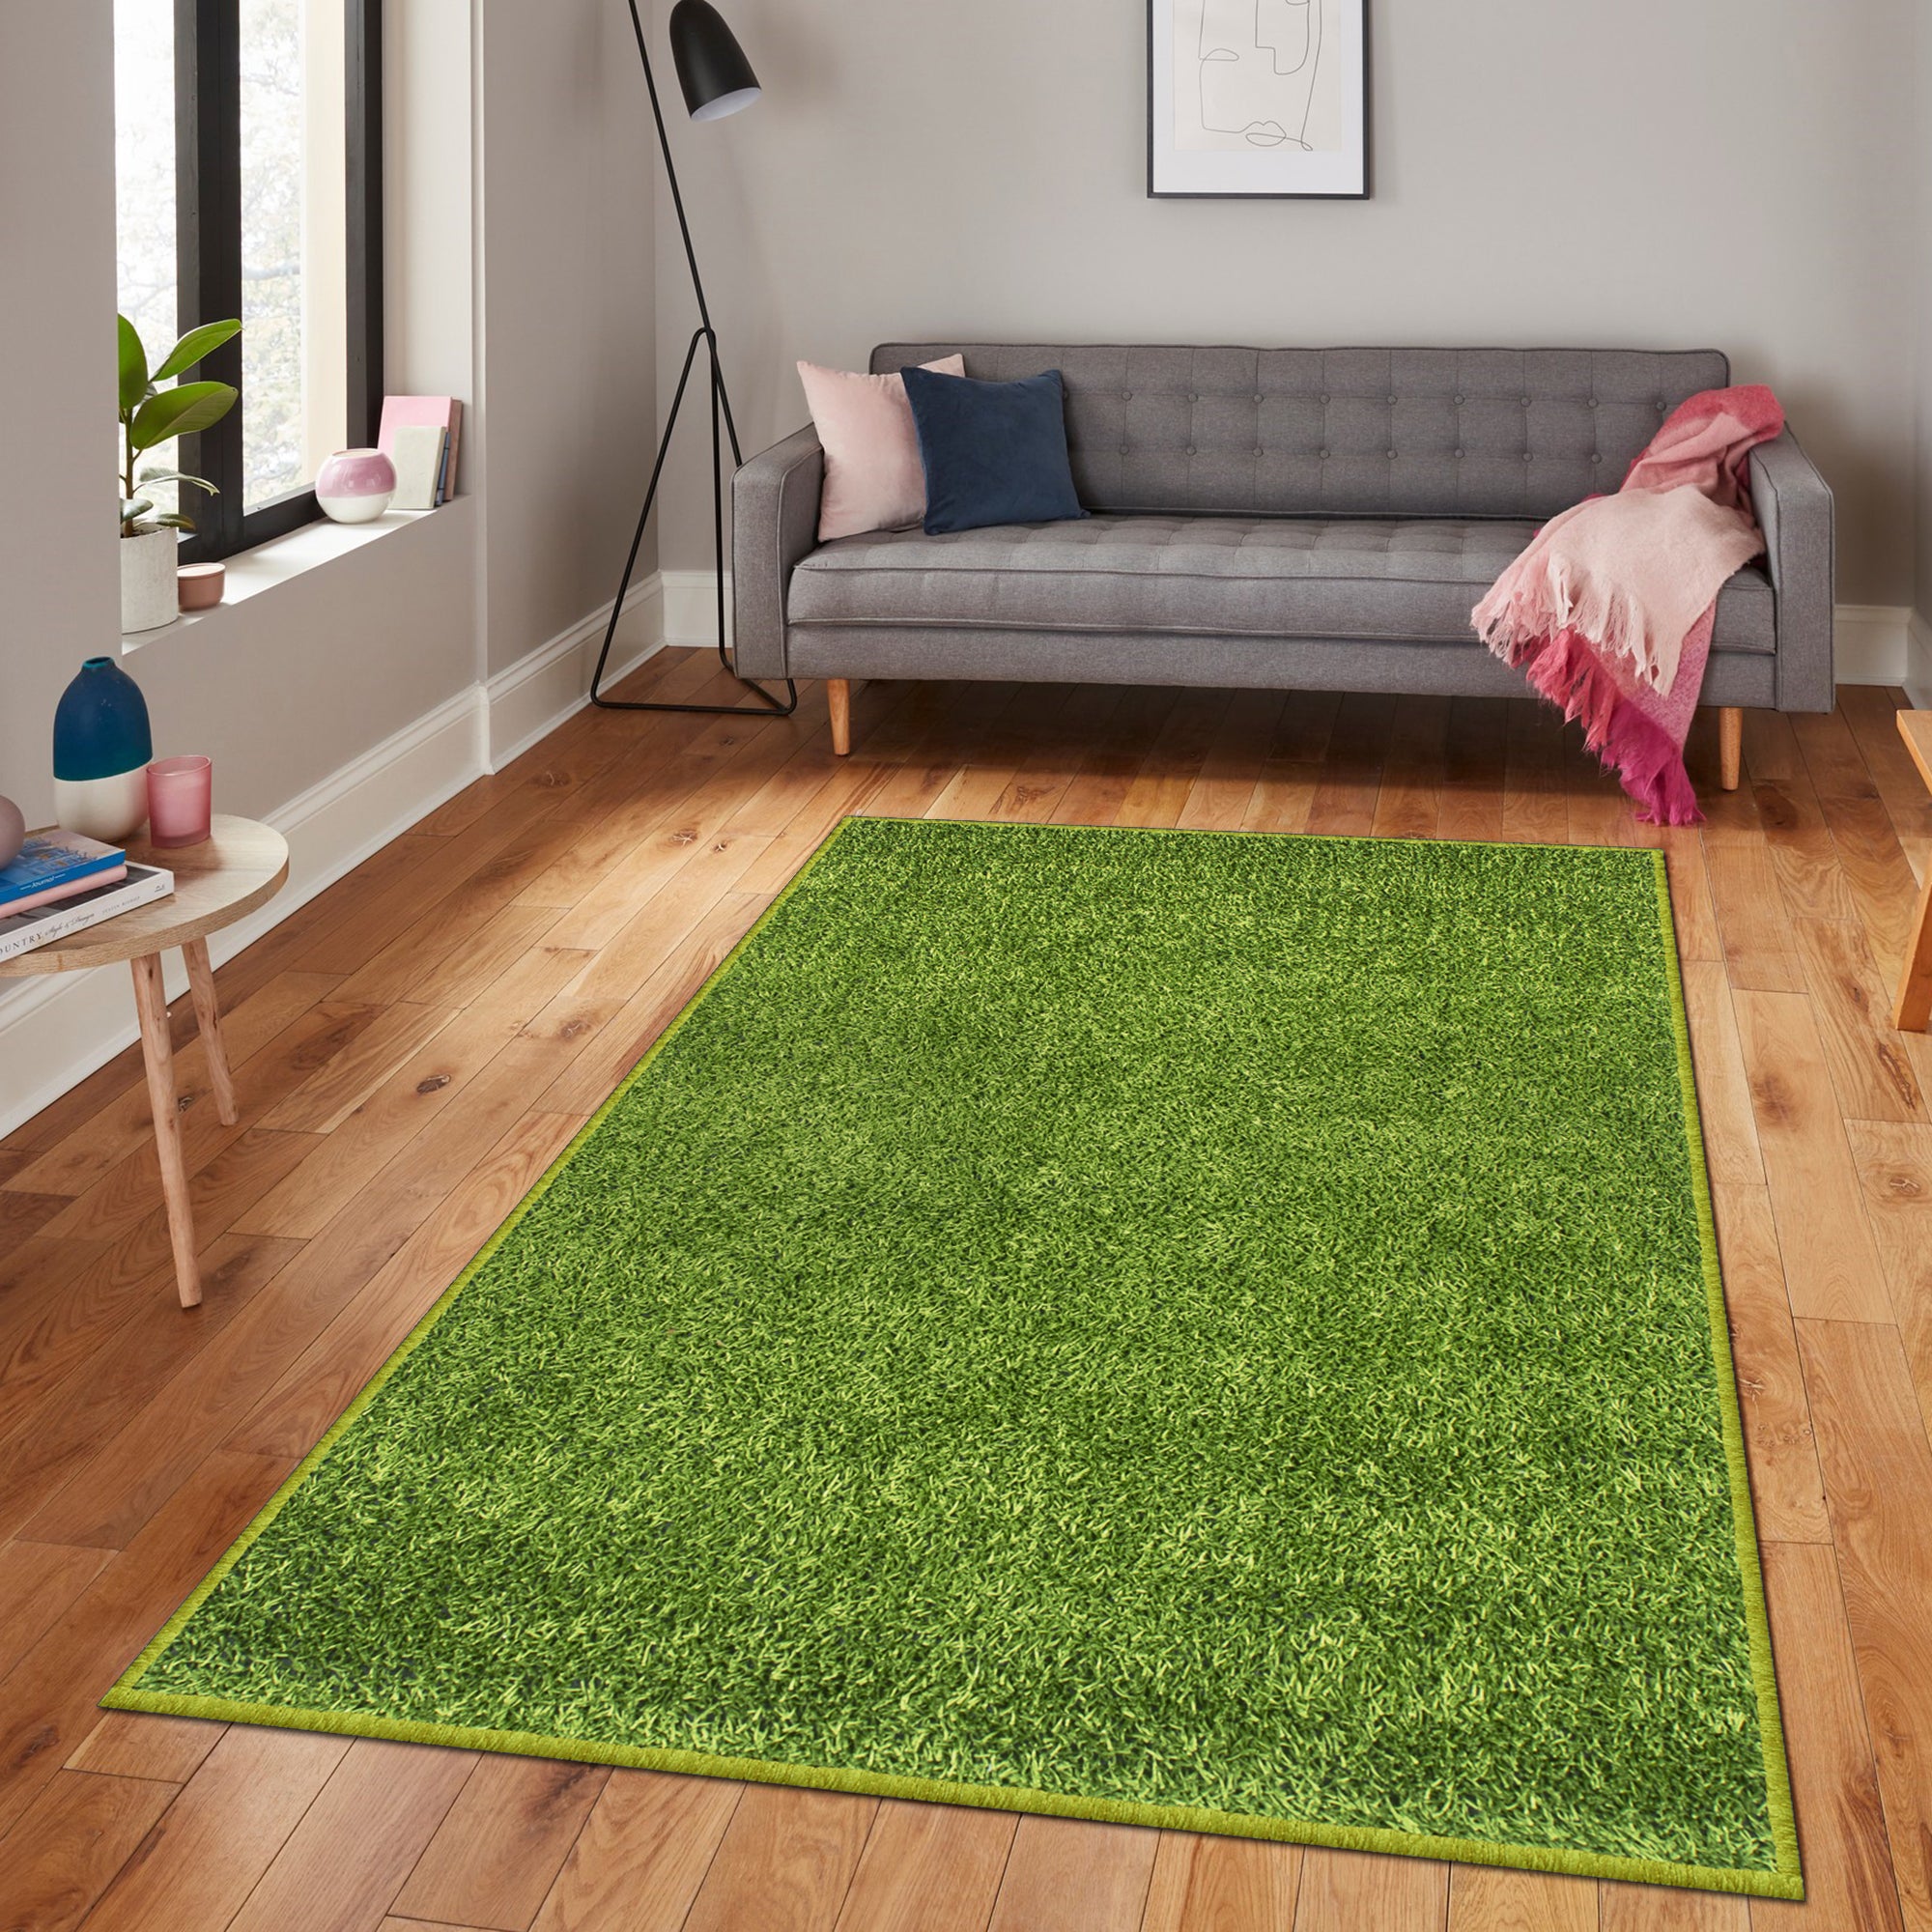 Story@Home Plain Pattern Green 1 PC Carpet